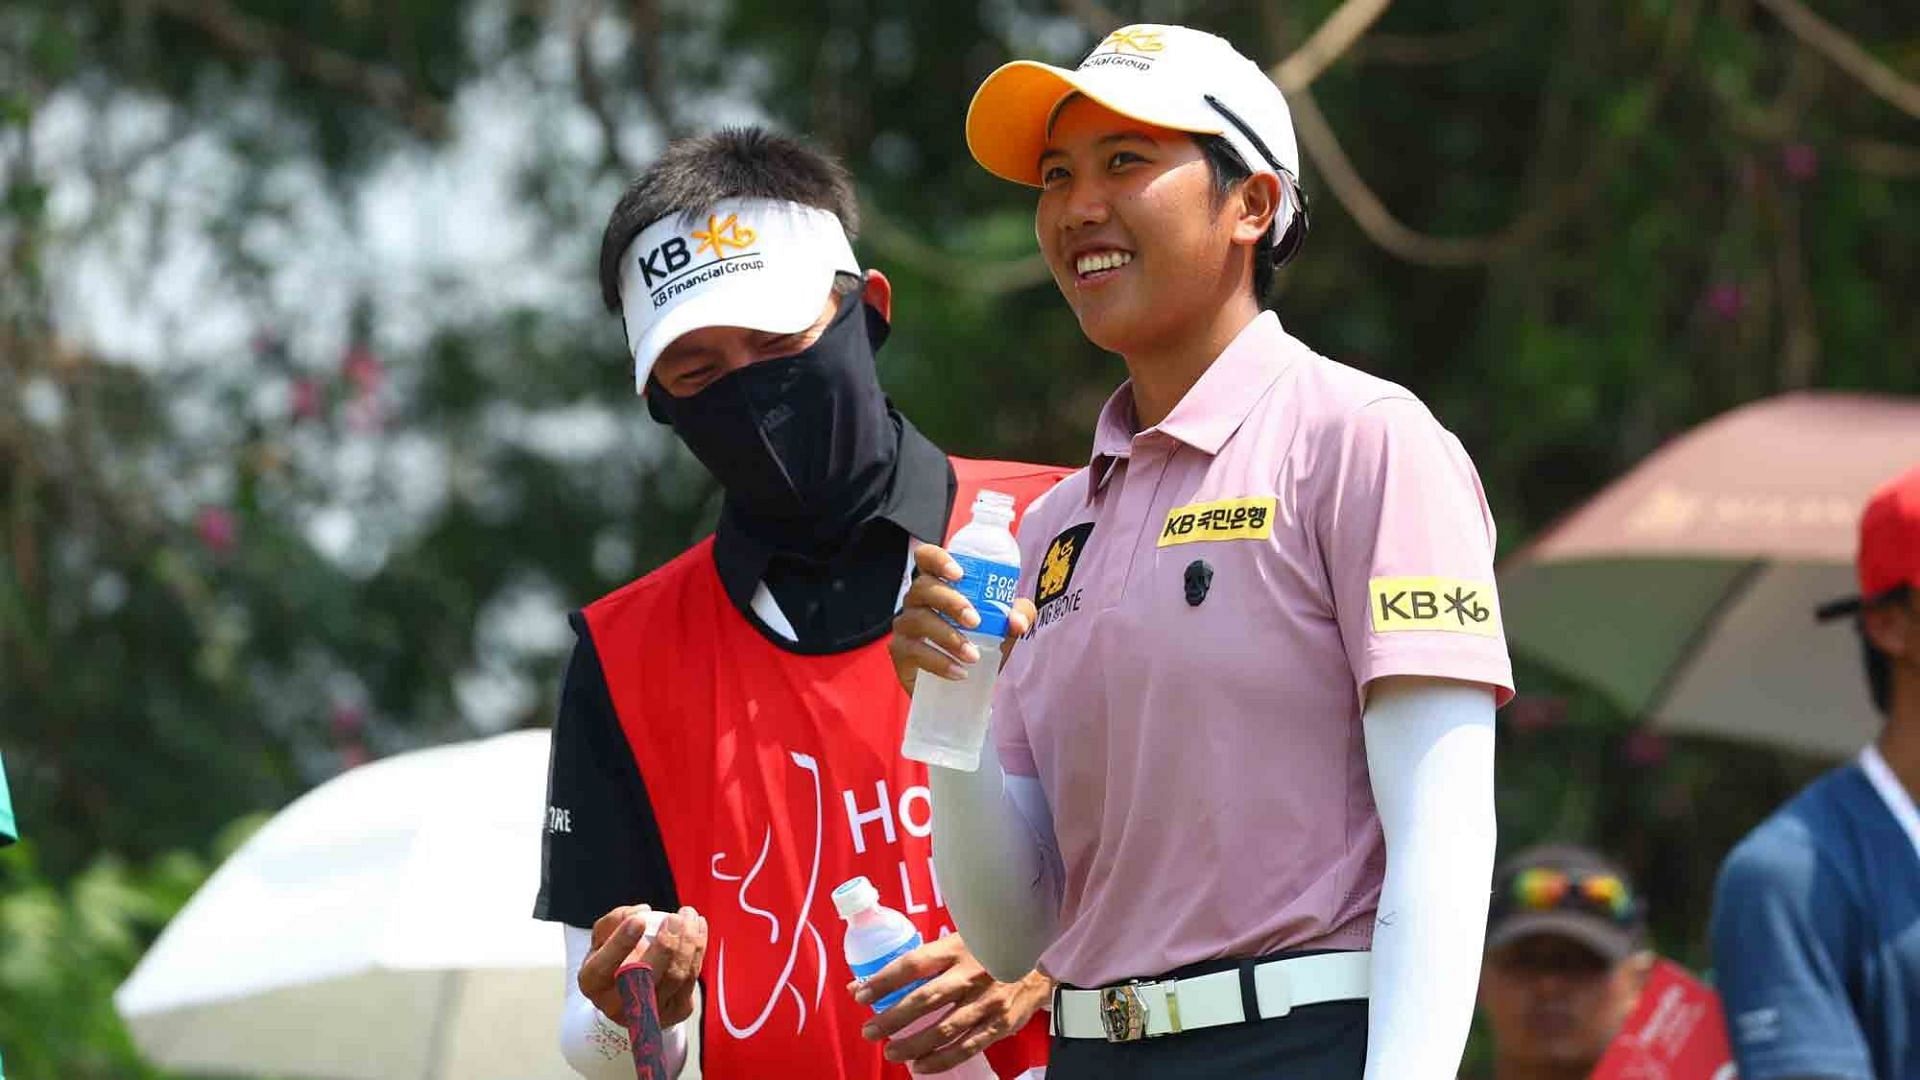 Natthakritta Vongtaveelap leads after three rounds of golf at Honda LPGA Thailand